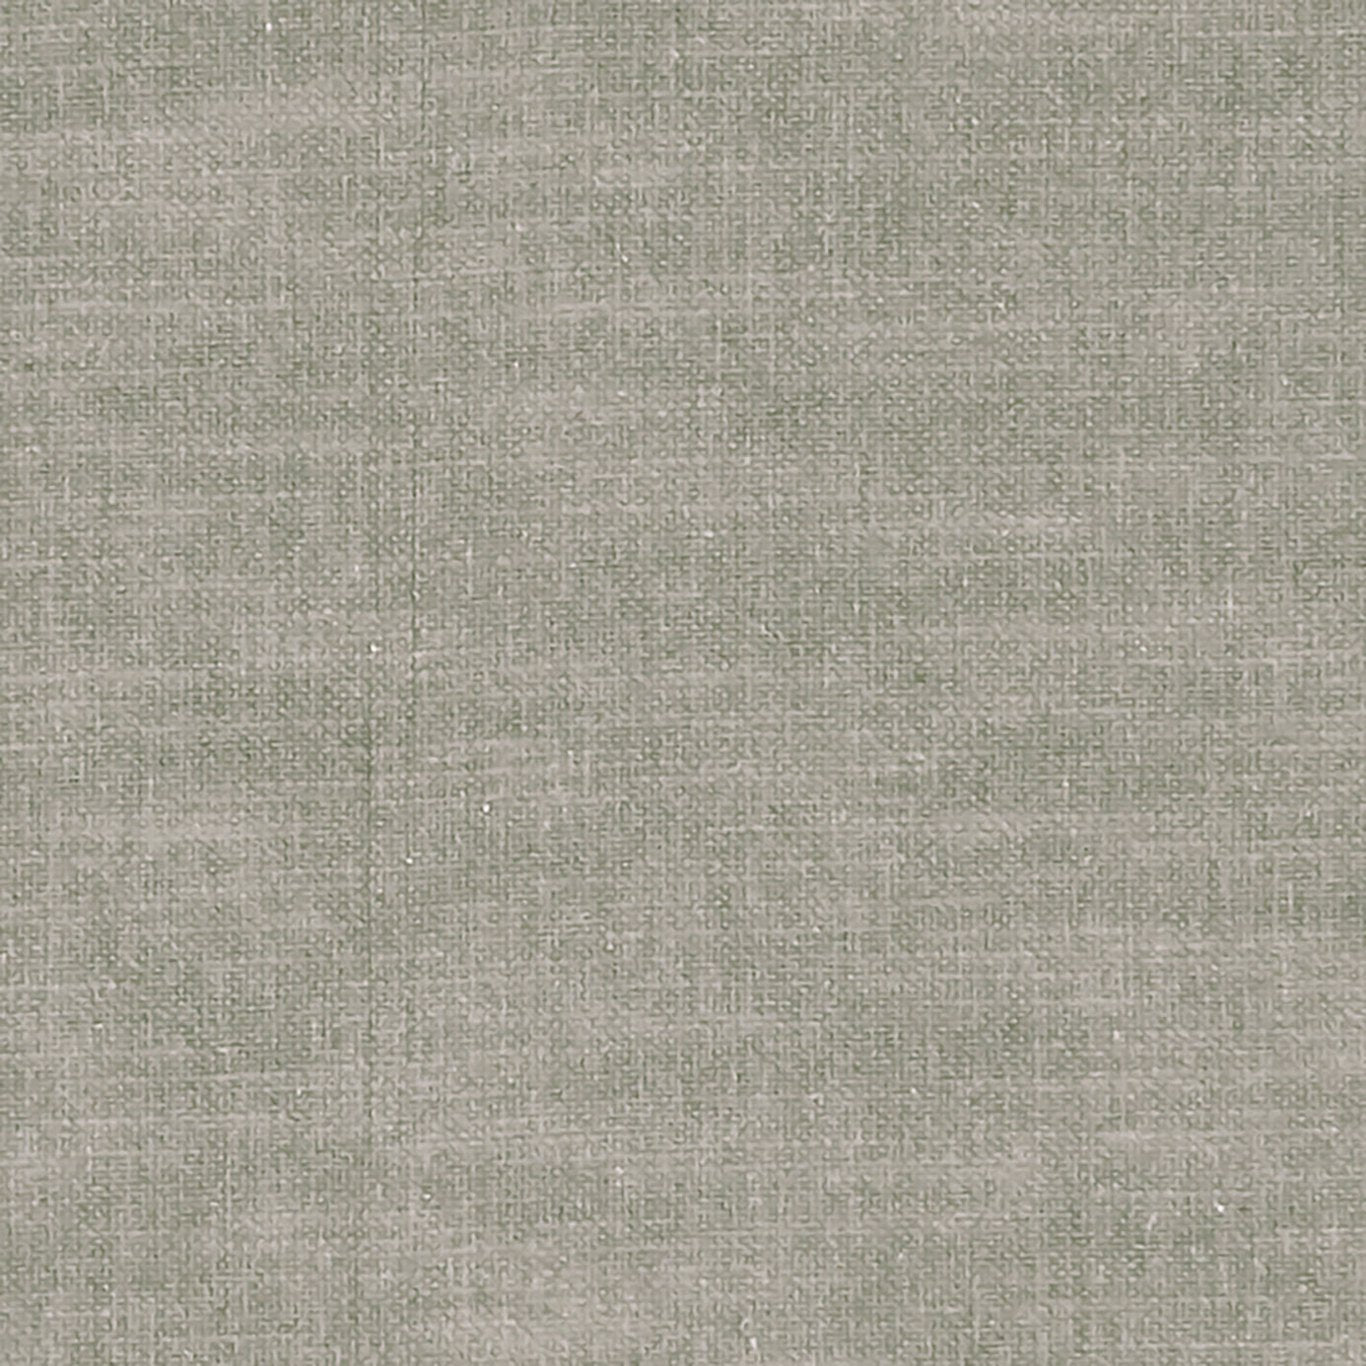 Amalfi Fabric by Clarke & Clarke - F1239/57 - Shale